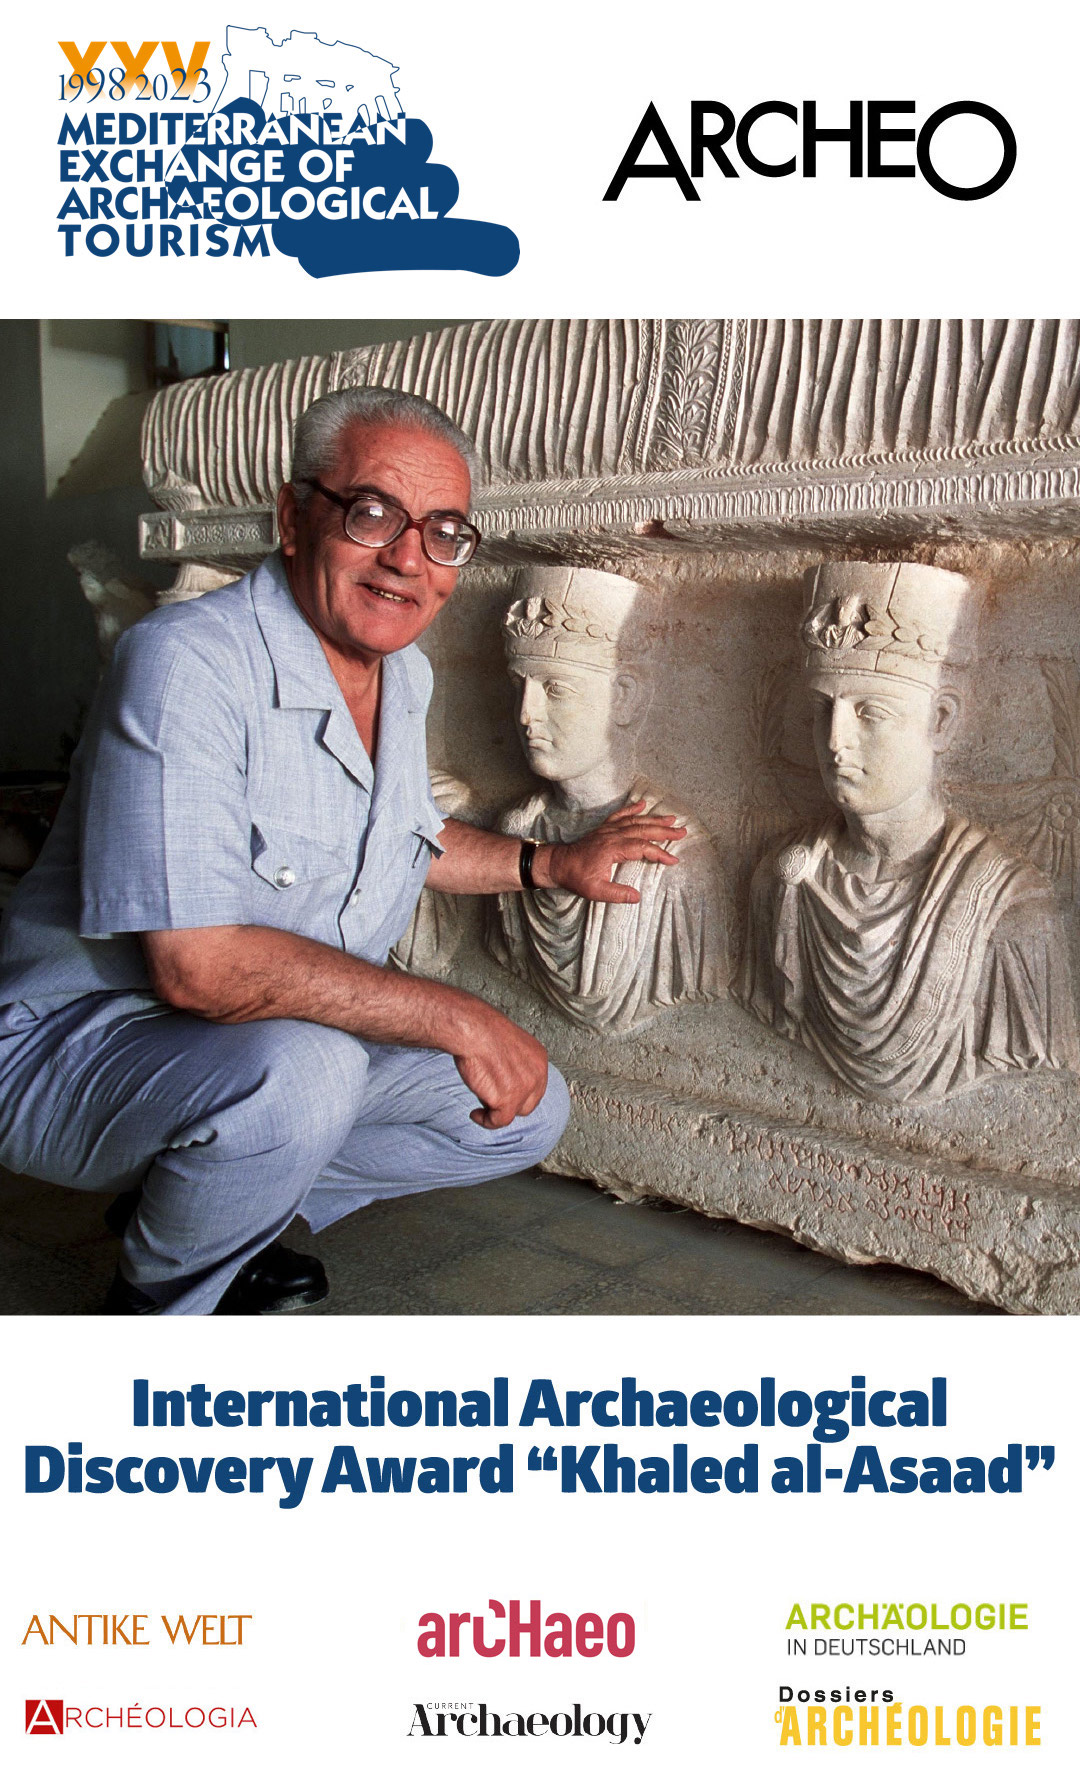  International Archaeological Discovery Award “Khaled al-Asaad”